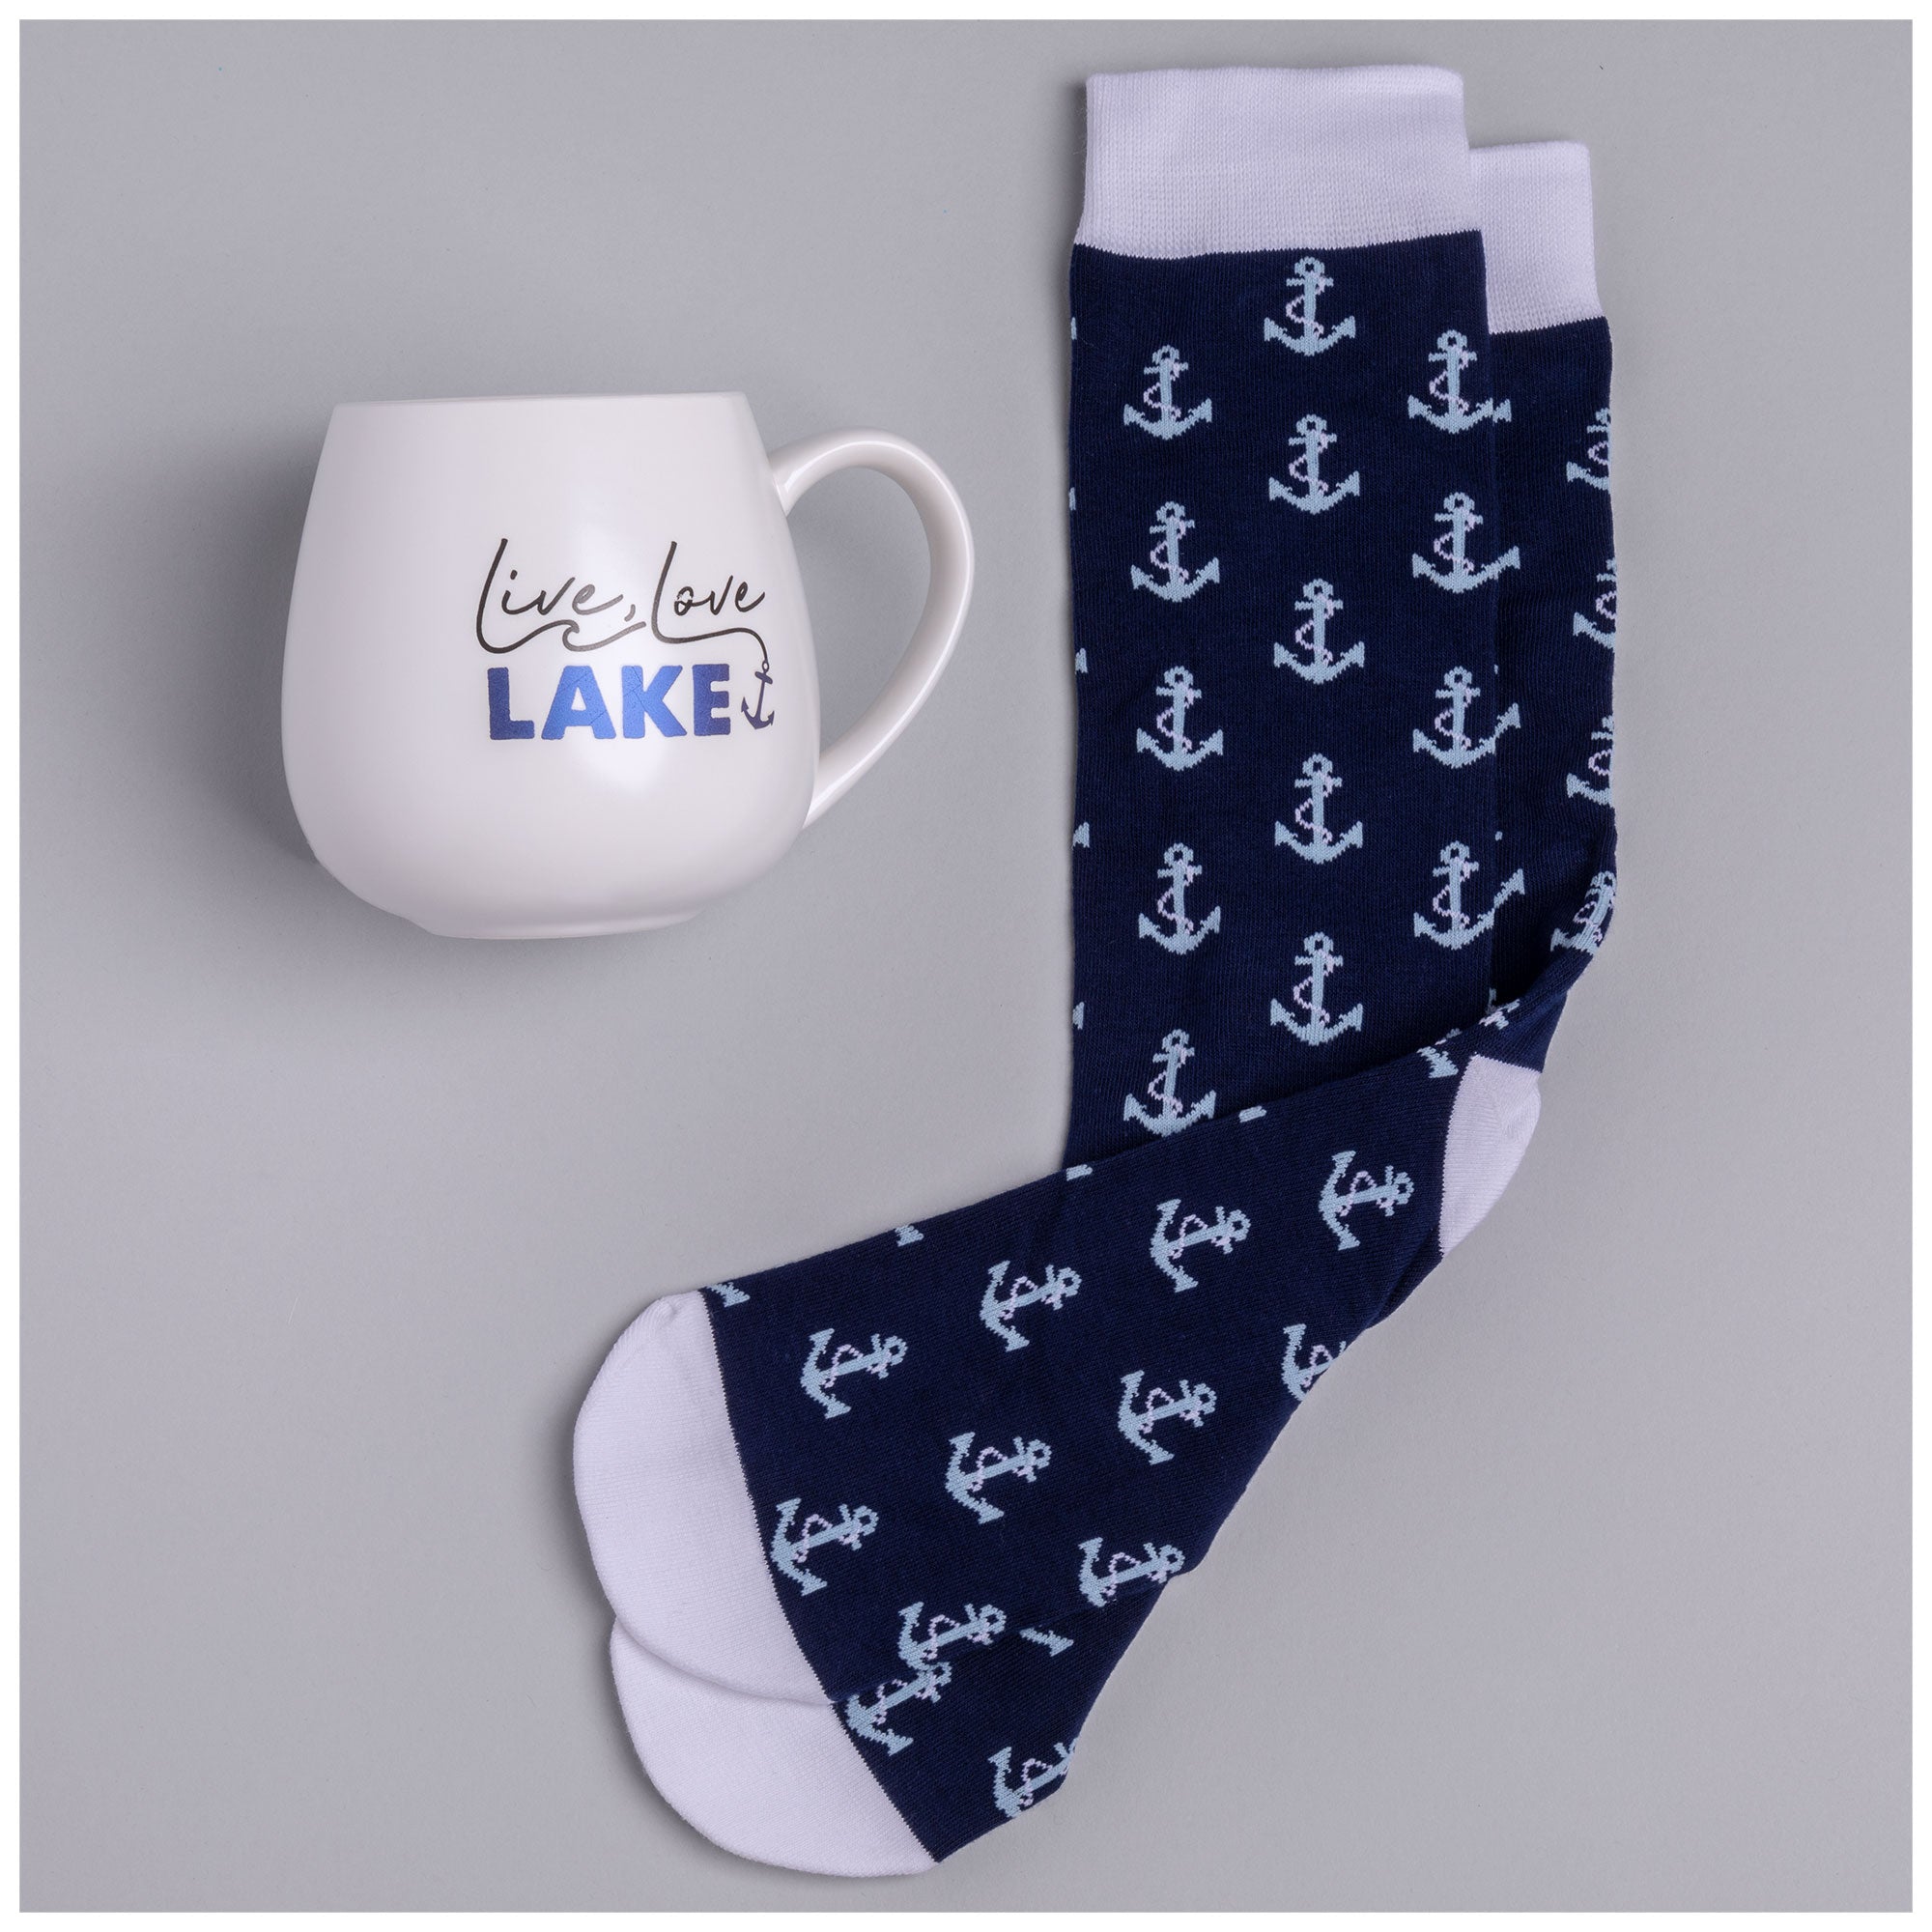 For The Perfect Person Mug & Sock Gift Set - Live Love Lake